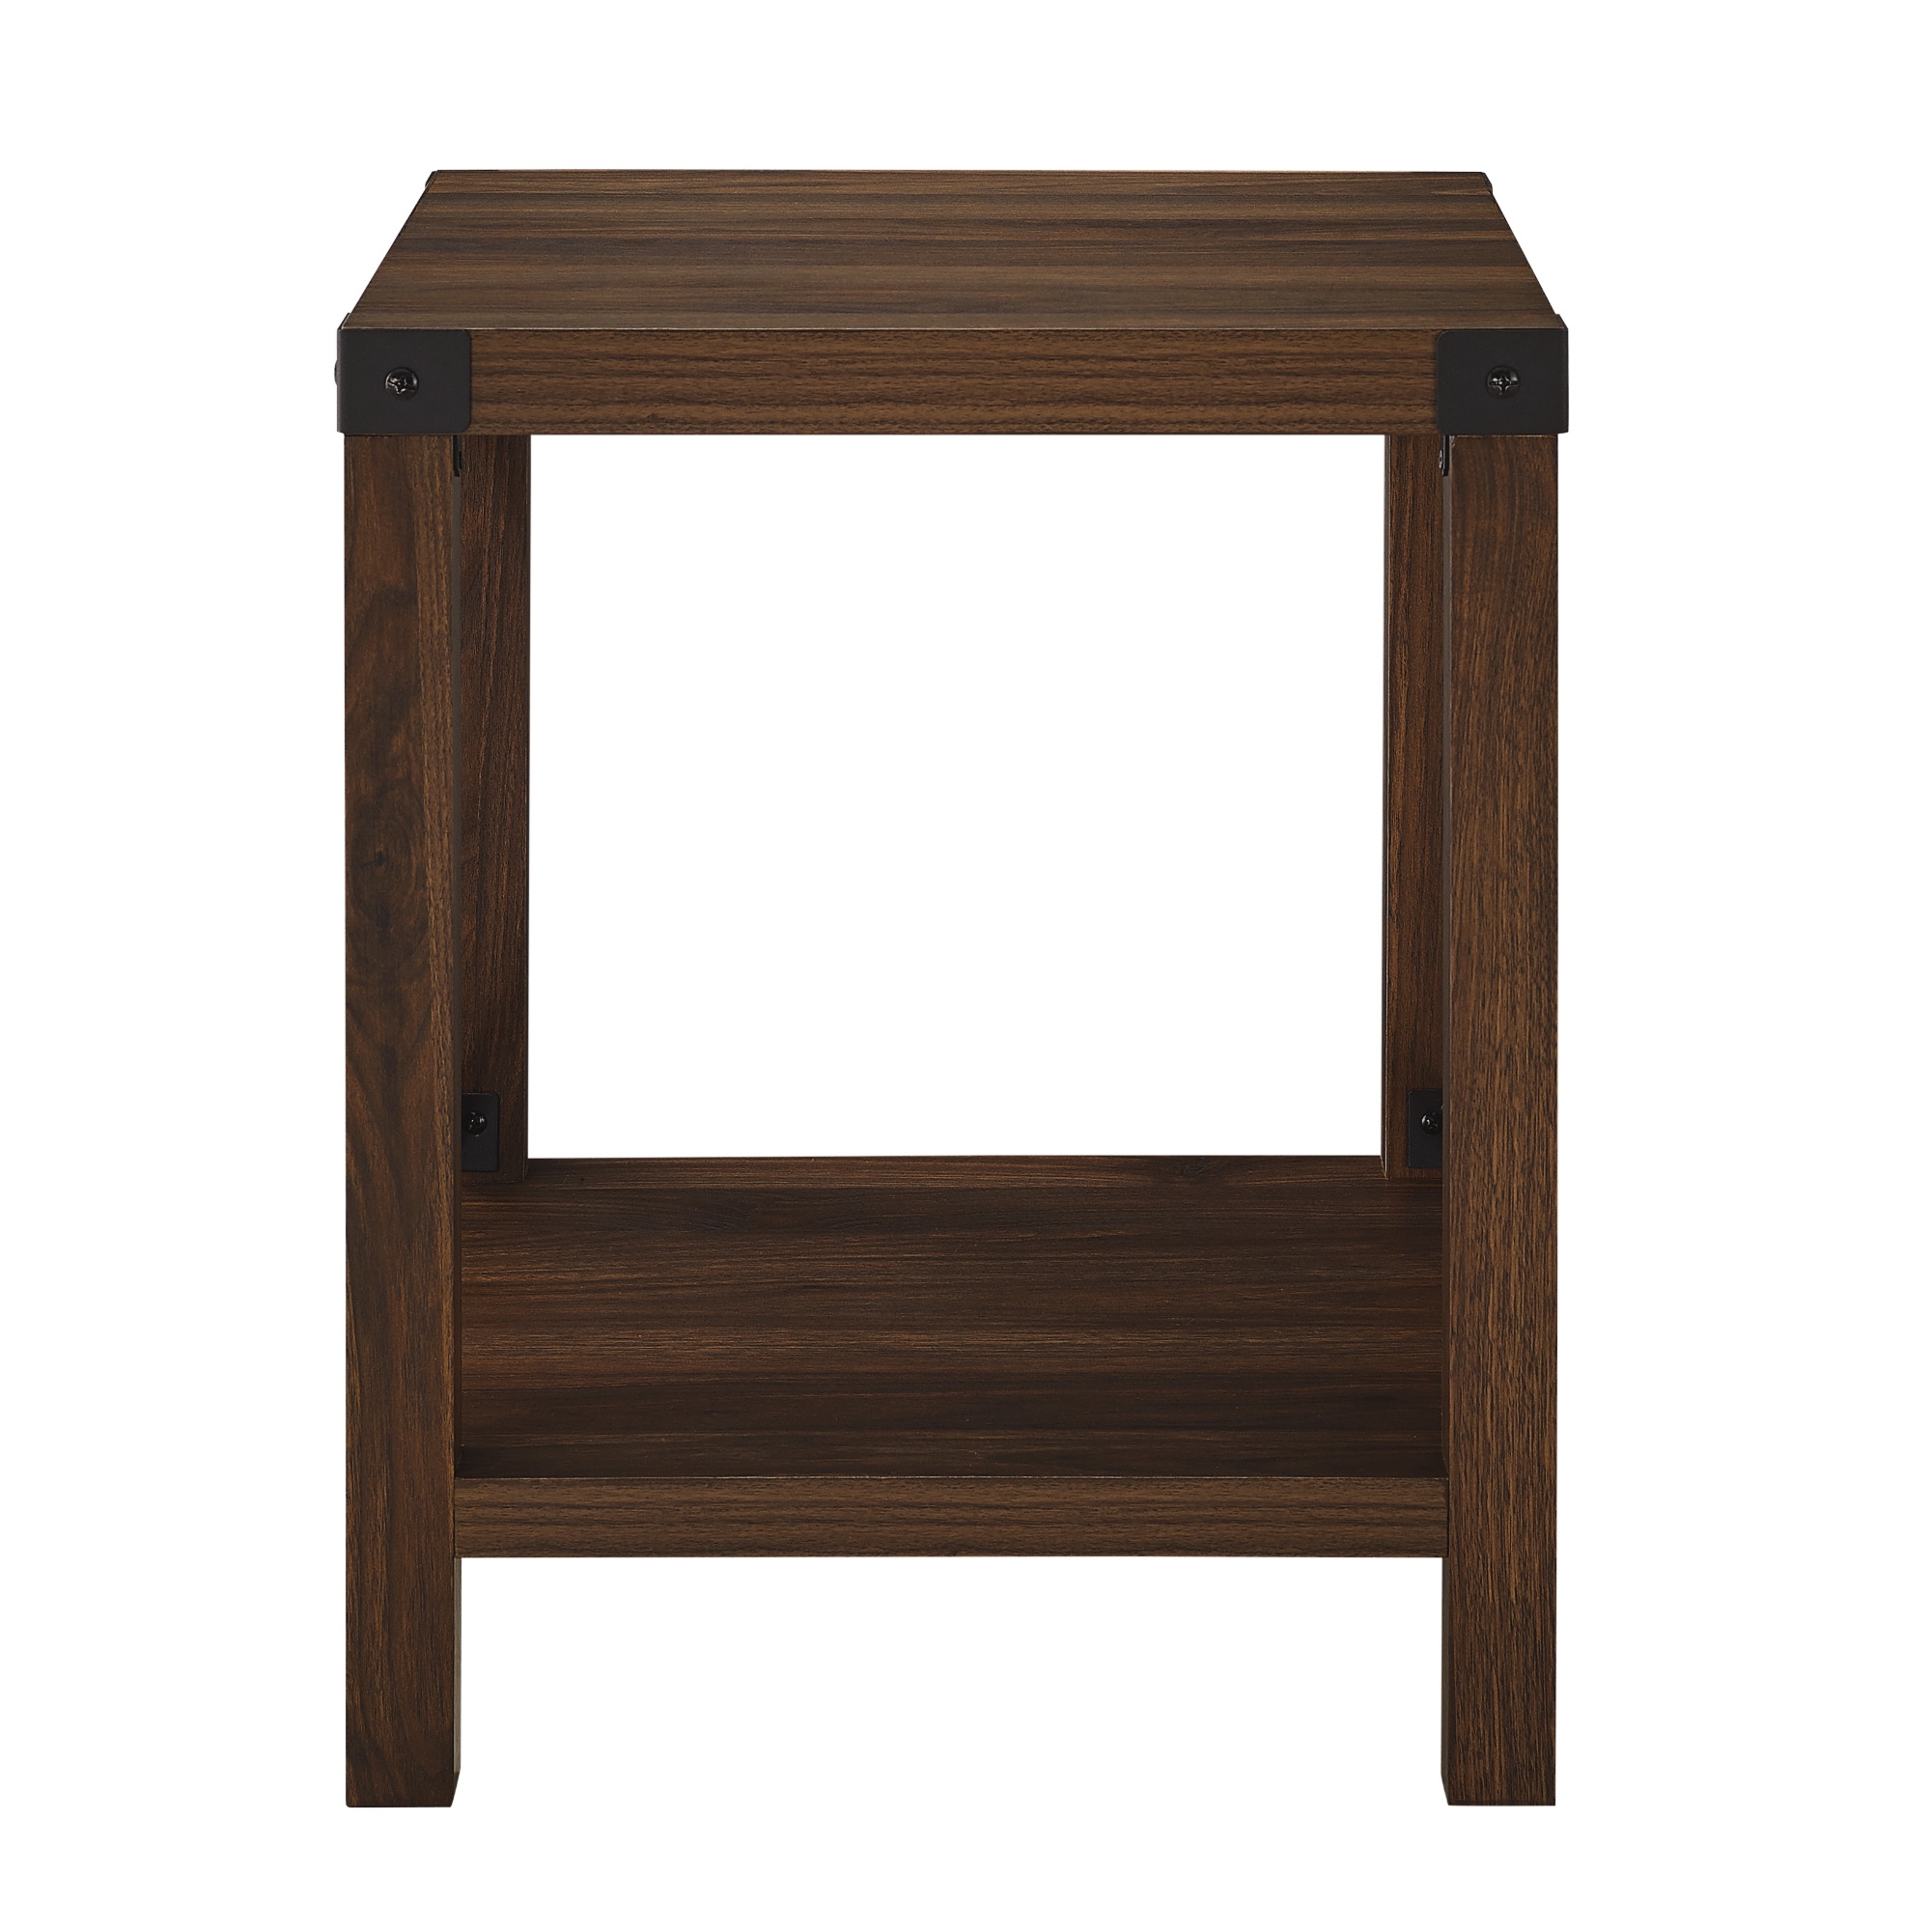 Metal X Rustic Wood Side Table - Dark Walnut - Image 1